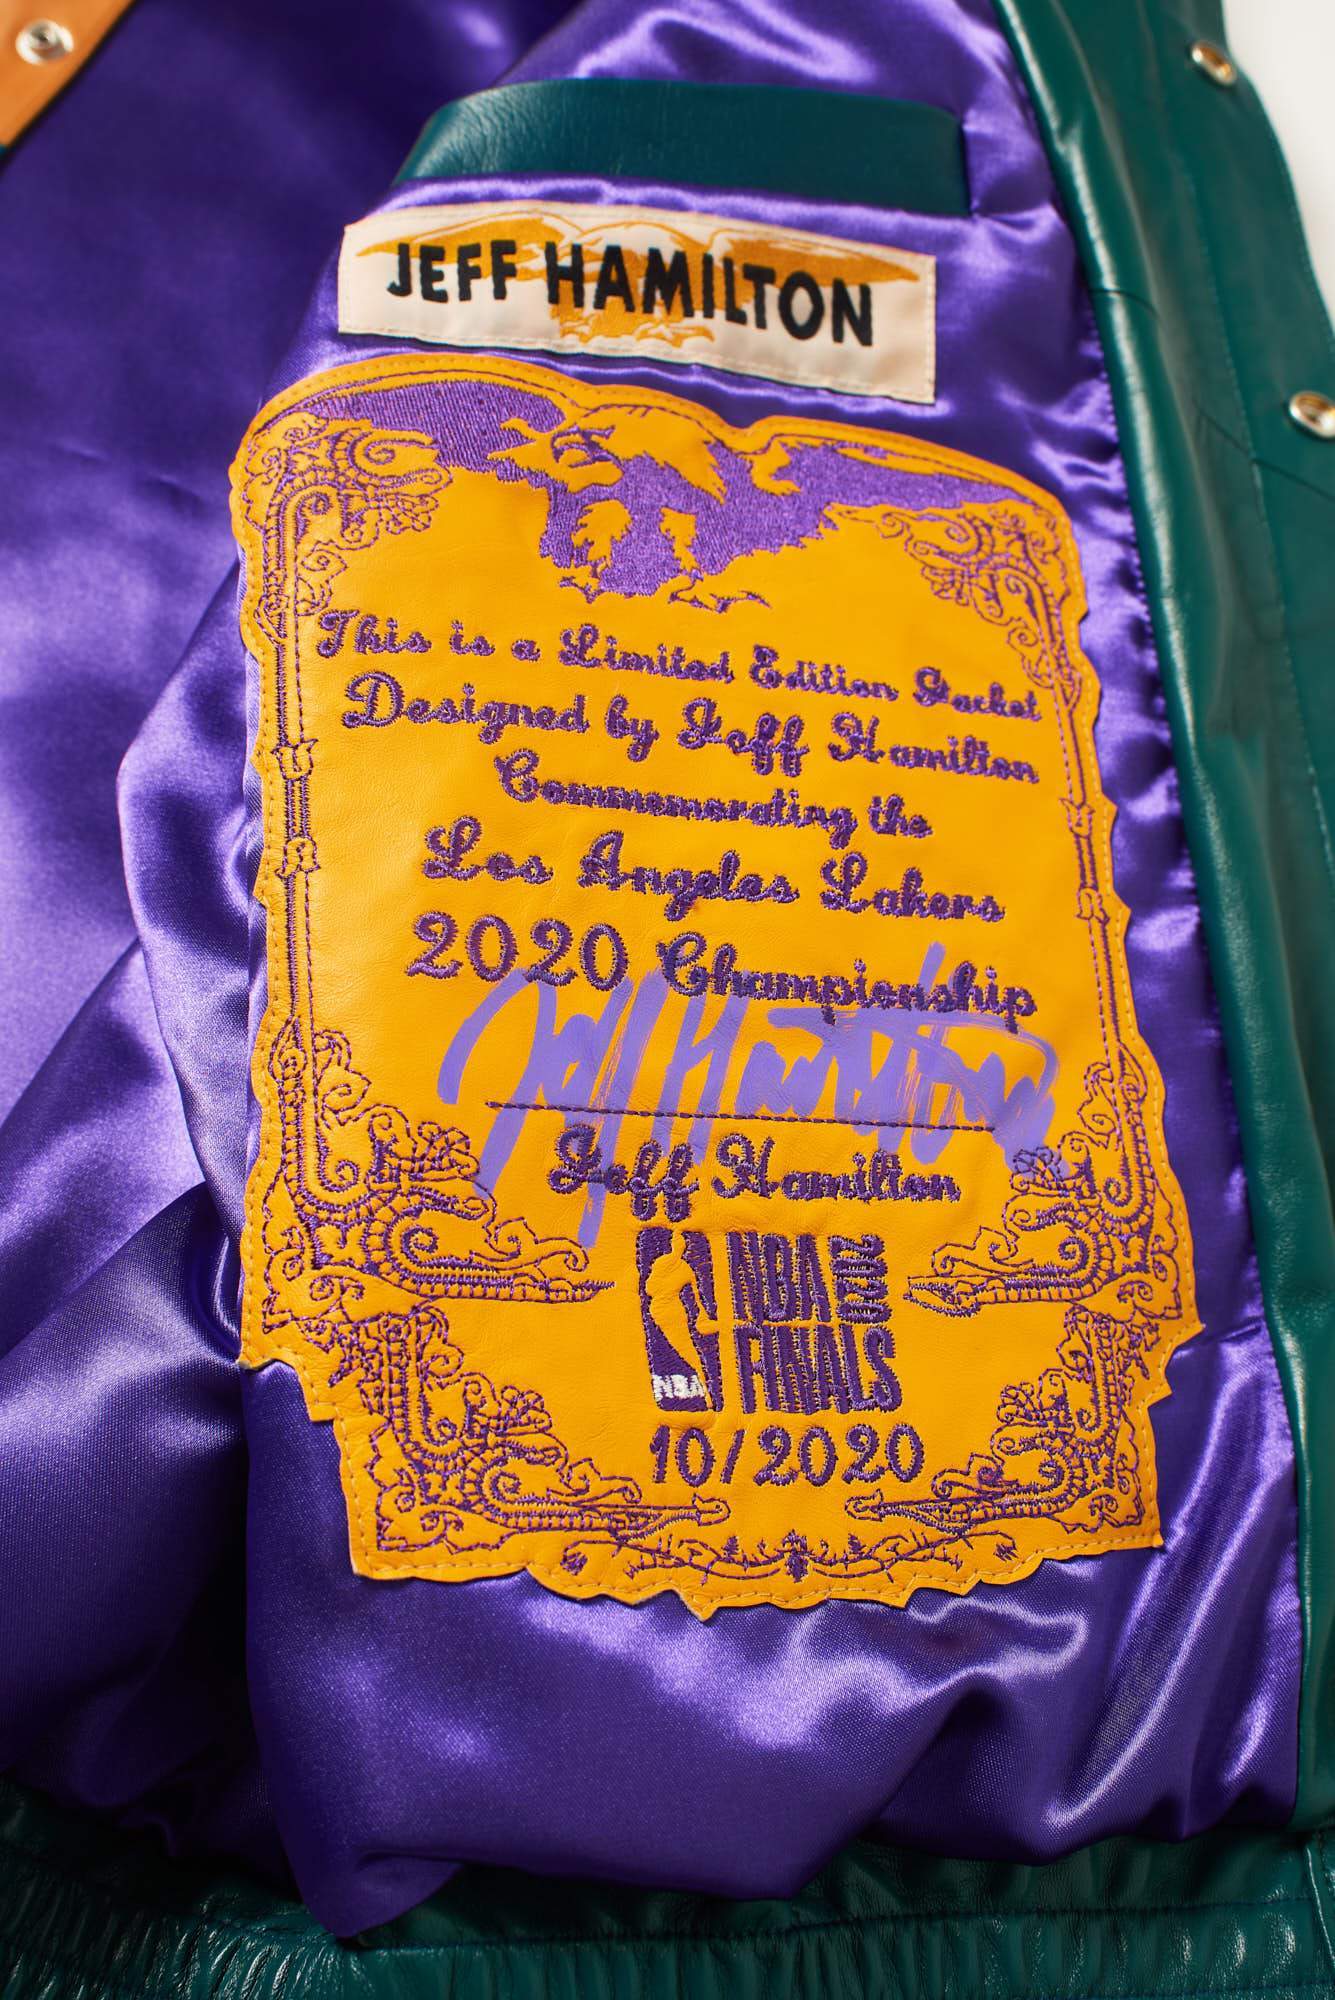 LAKERS 2002 3PEAT NBA CHAMPIONSHIP GENUINE LEATHER JACKET